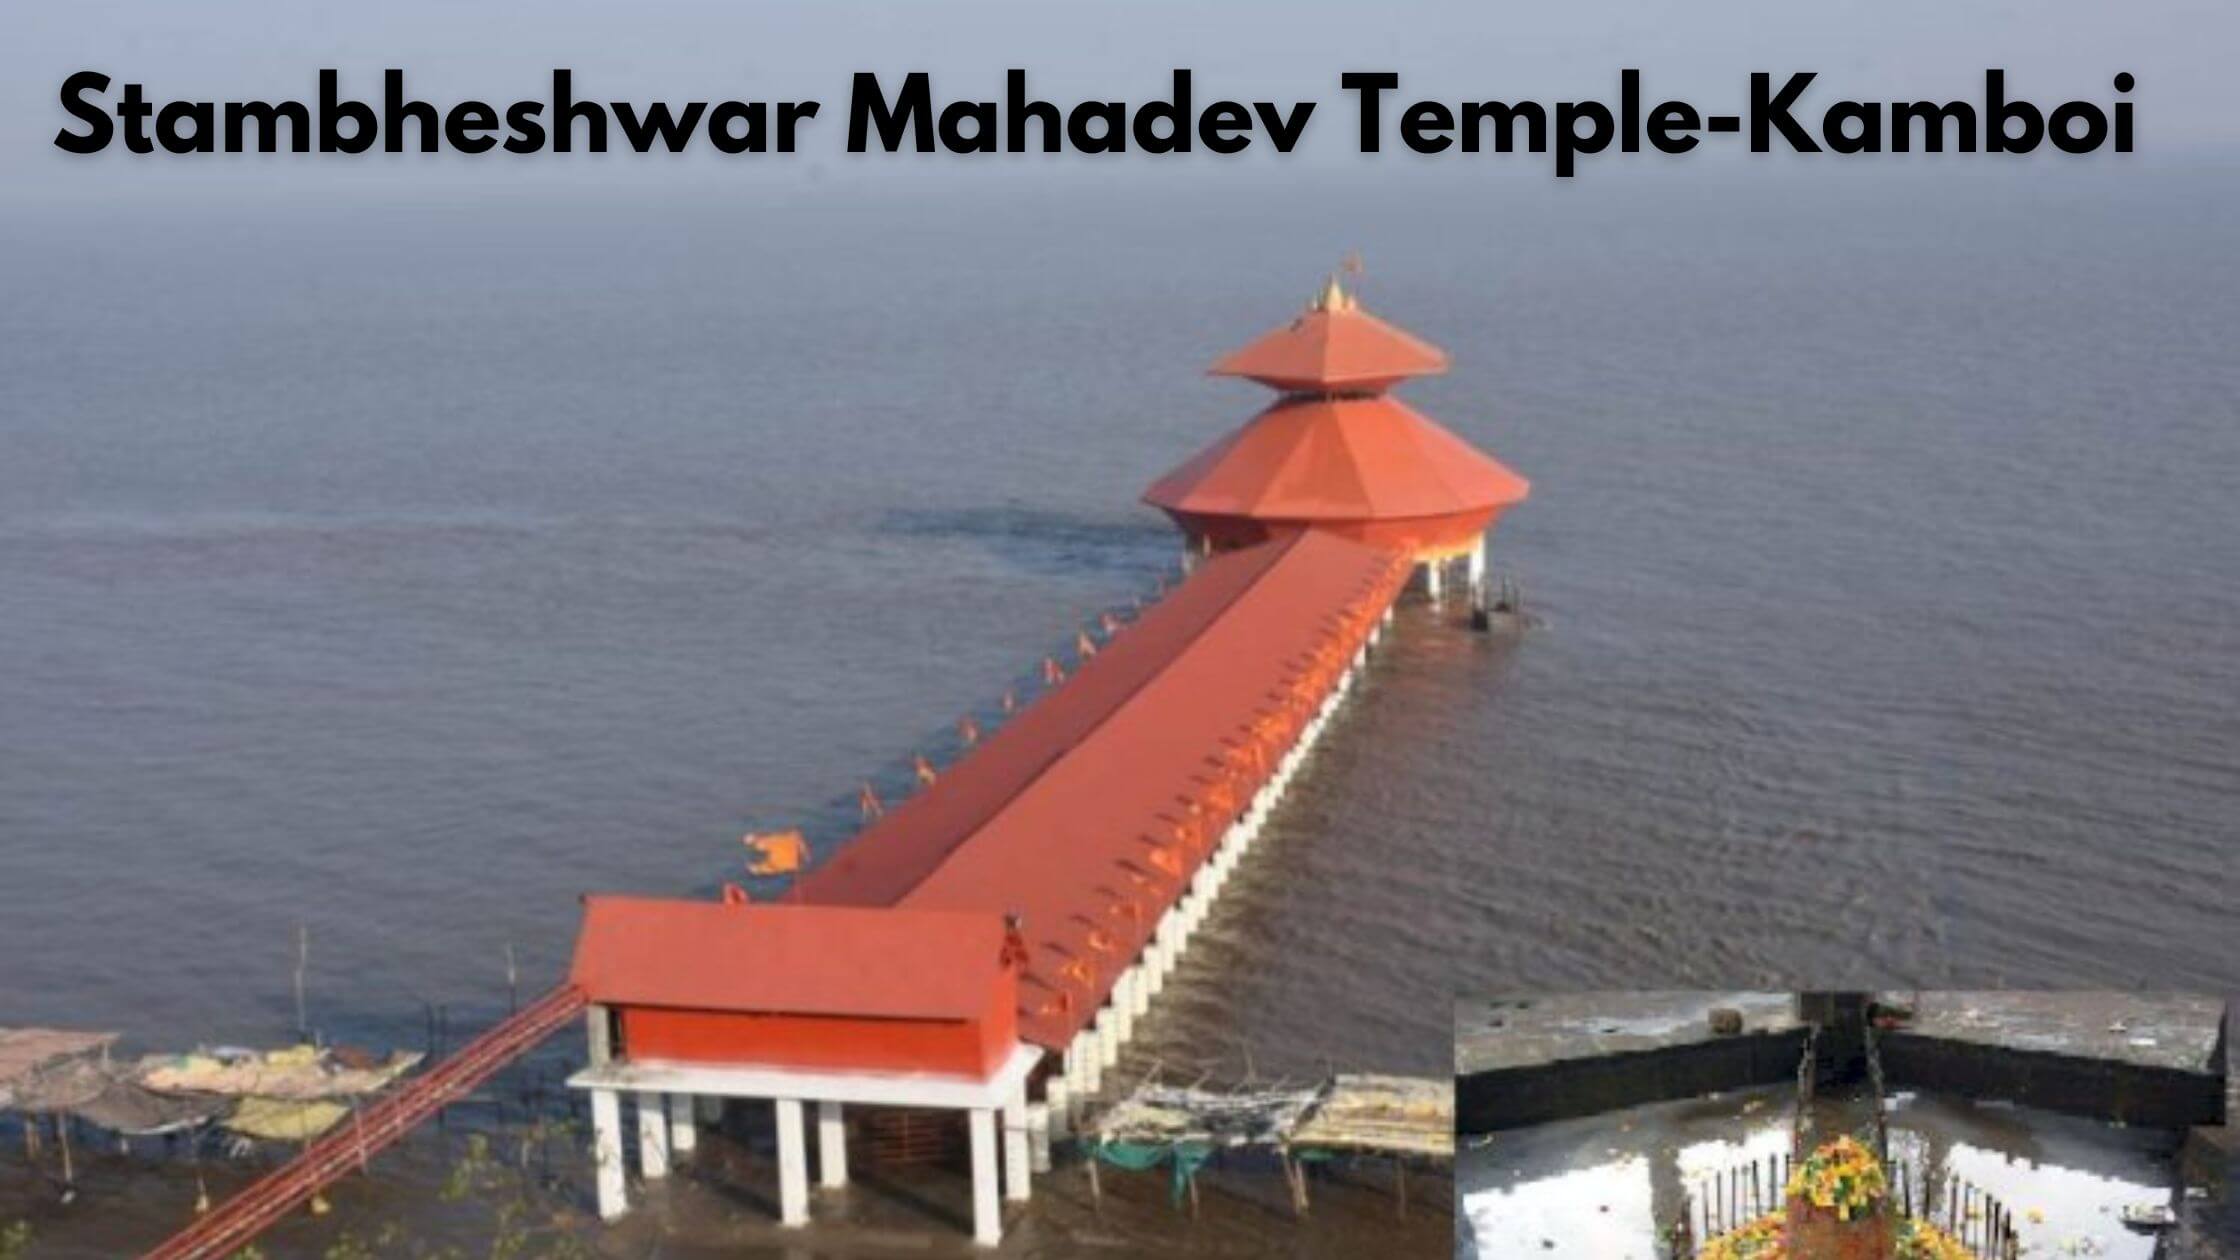 stambheshwar mahadev temple